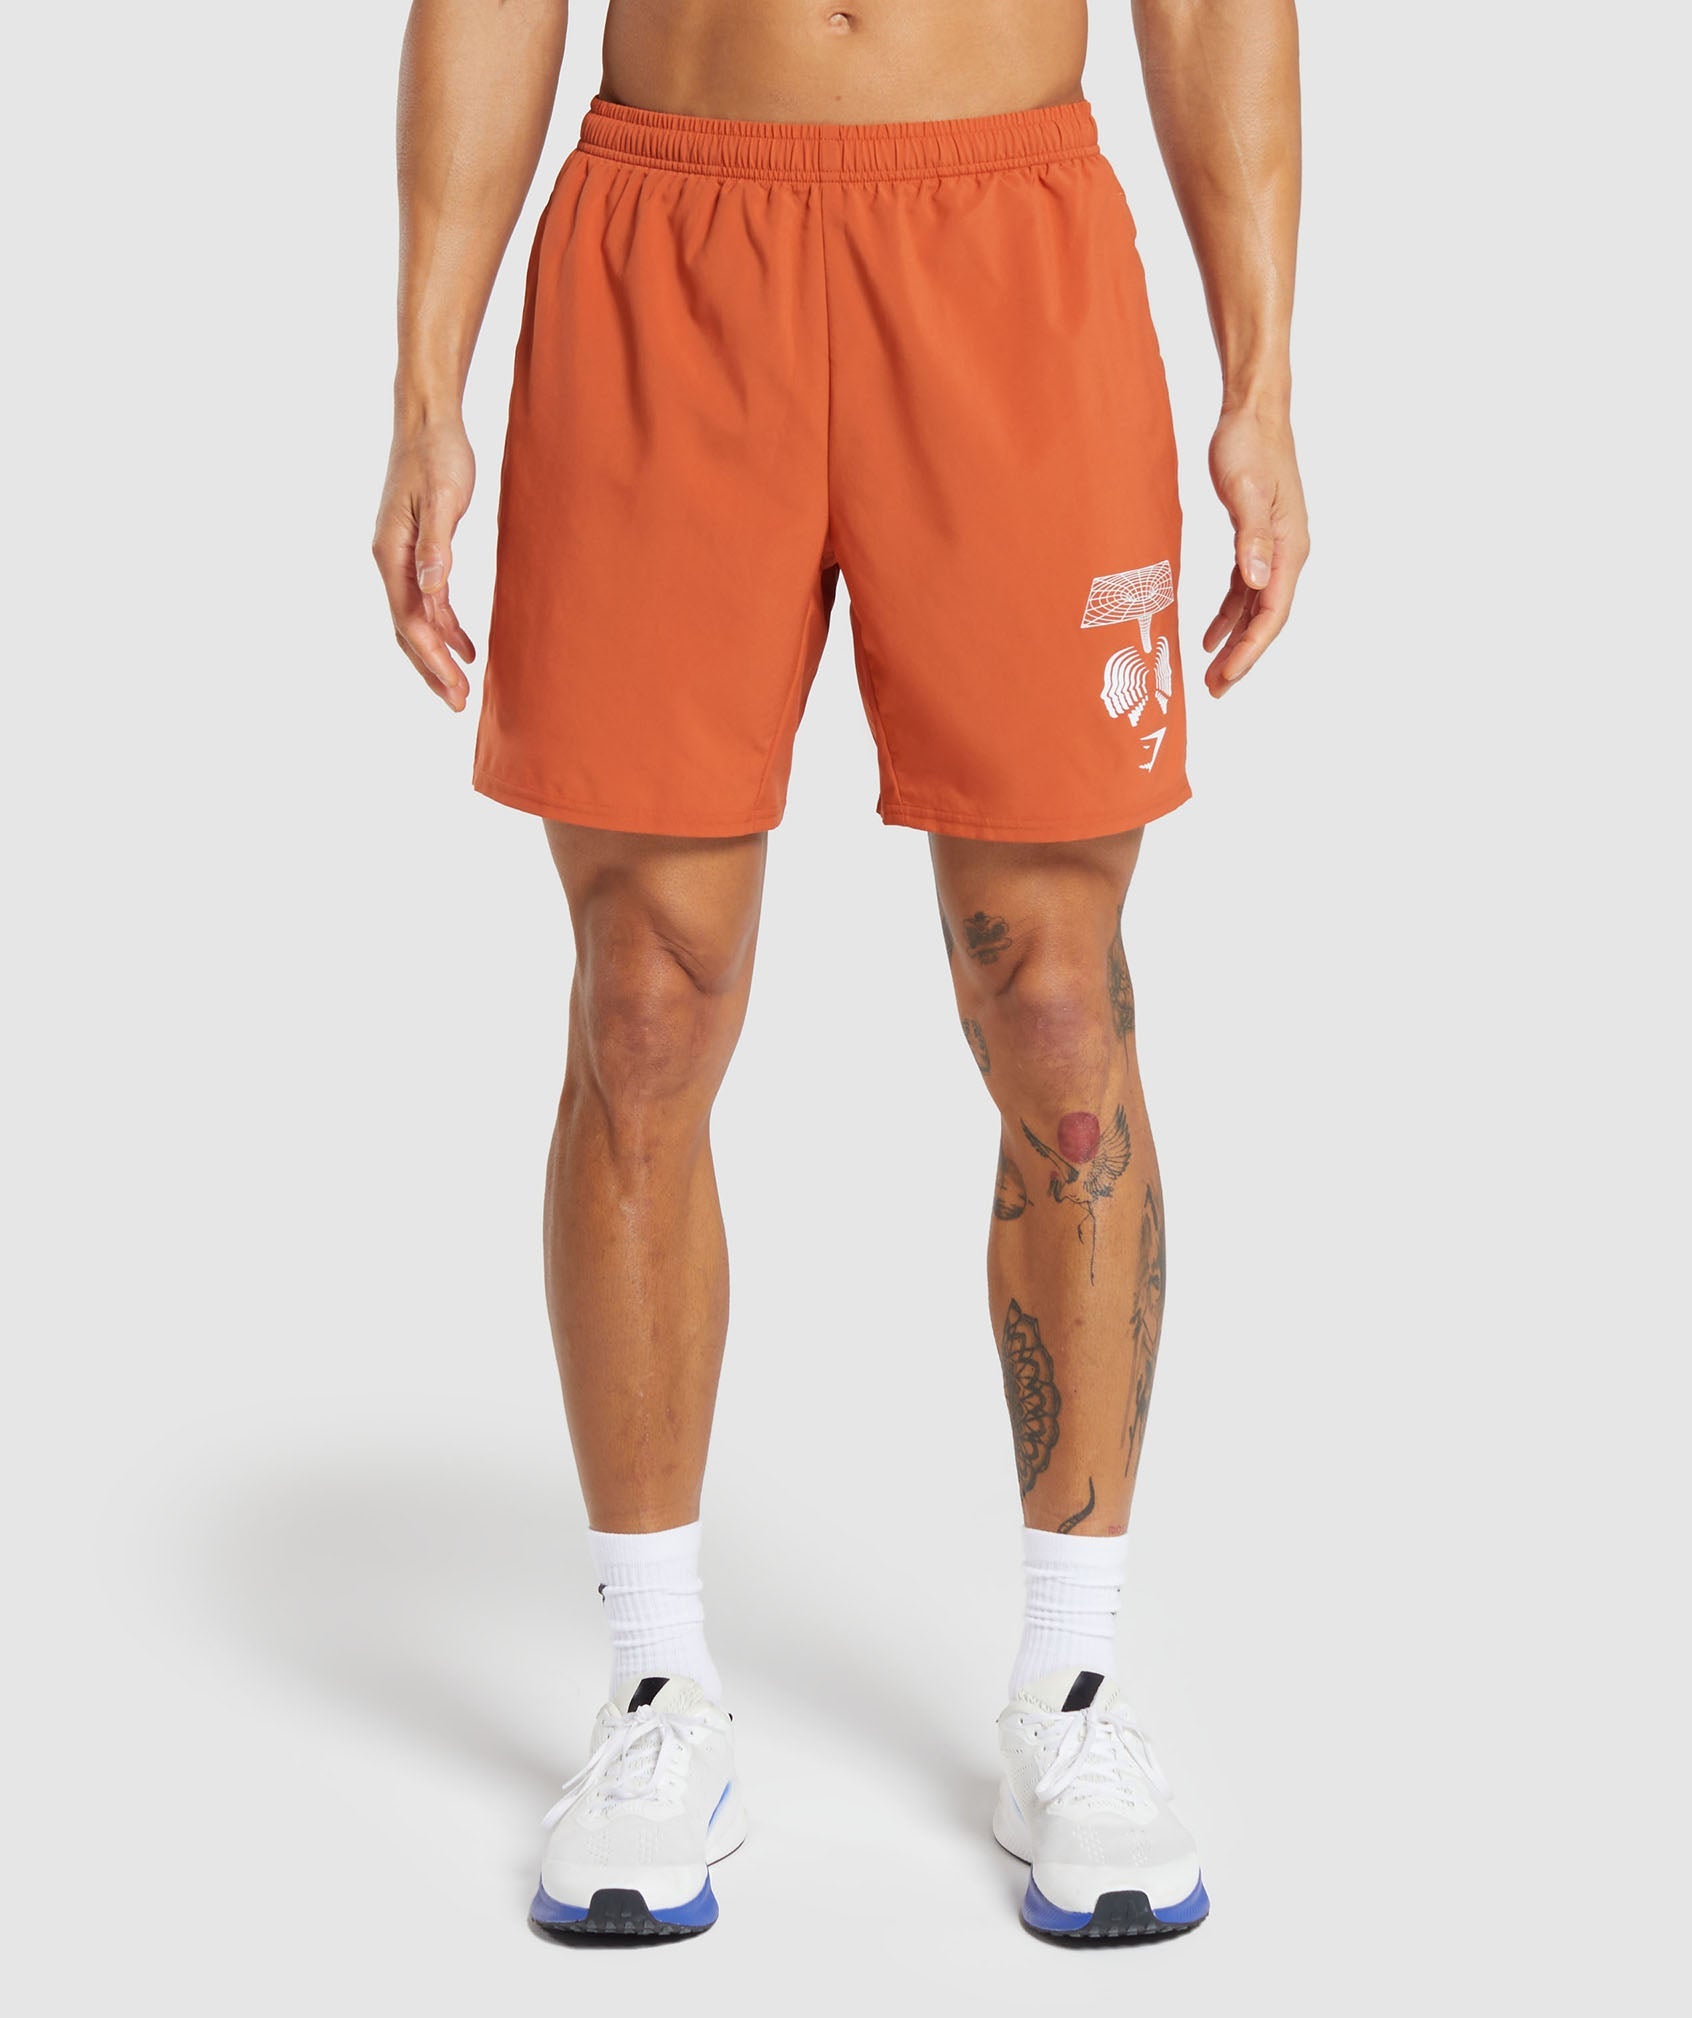 Hybrid Wellness 7" Shorts in Rust Orange - view 1